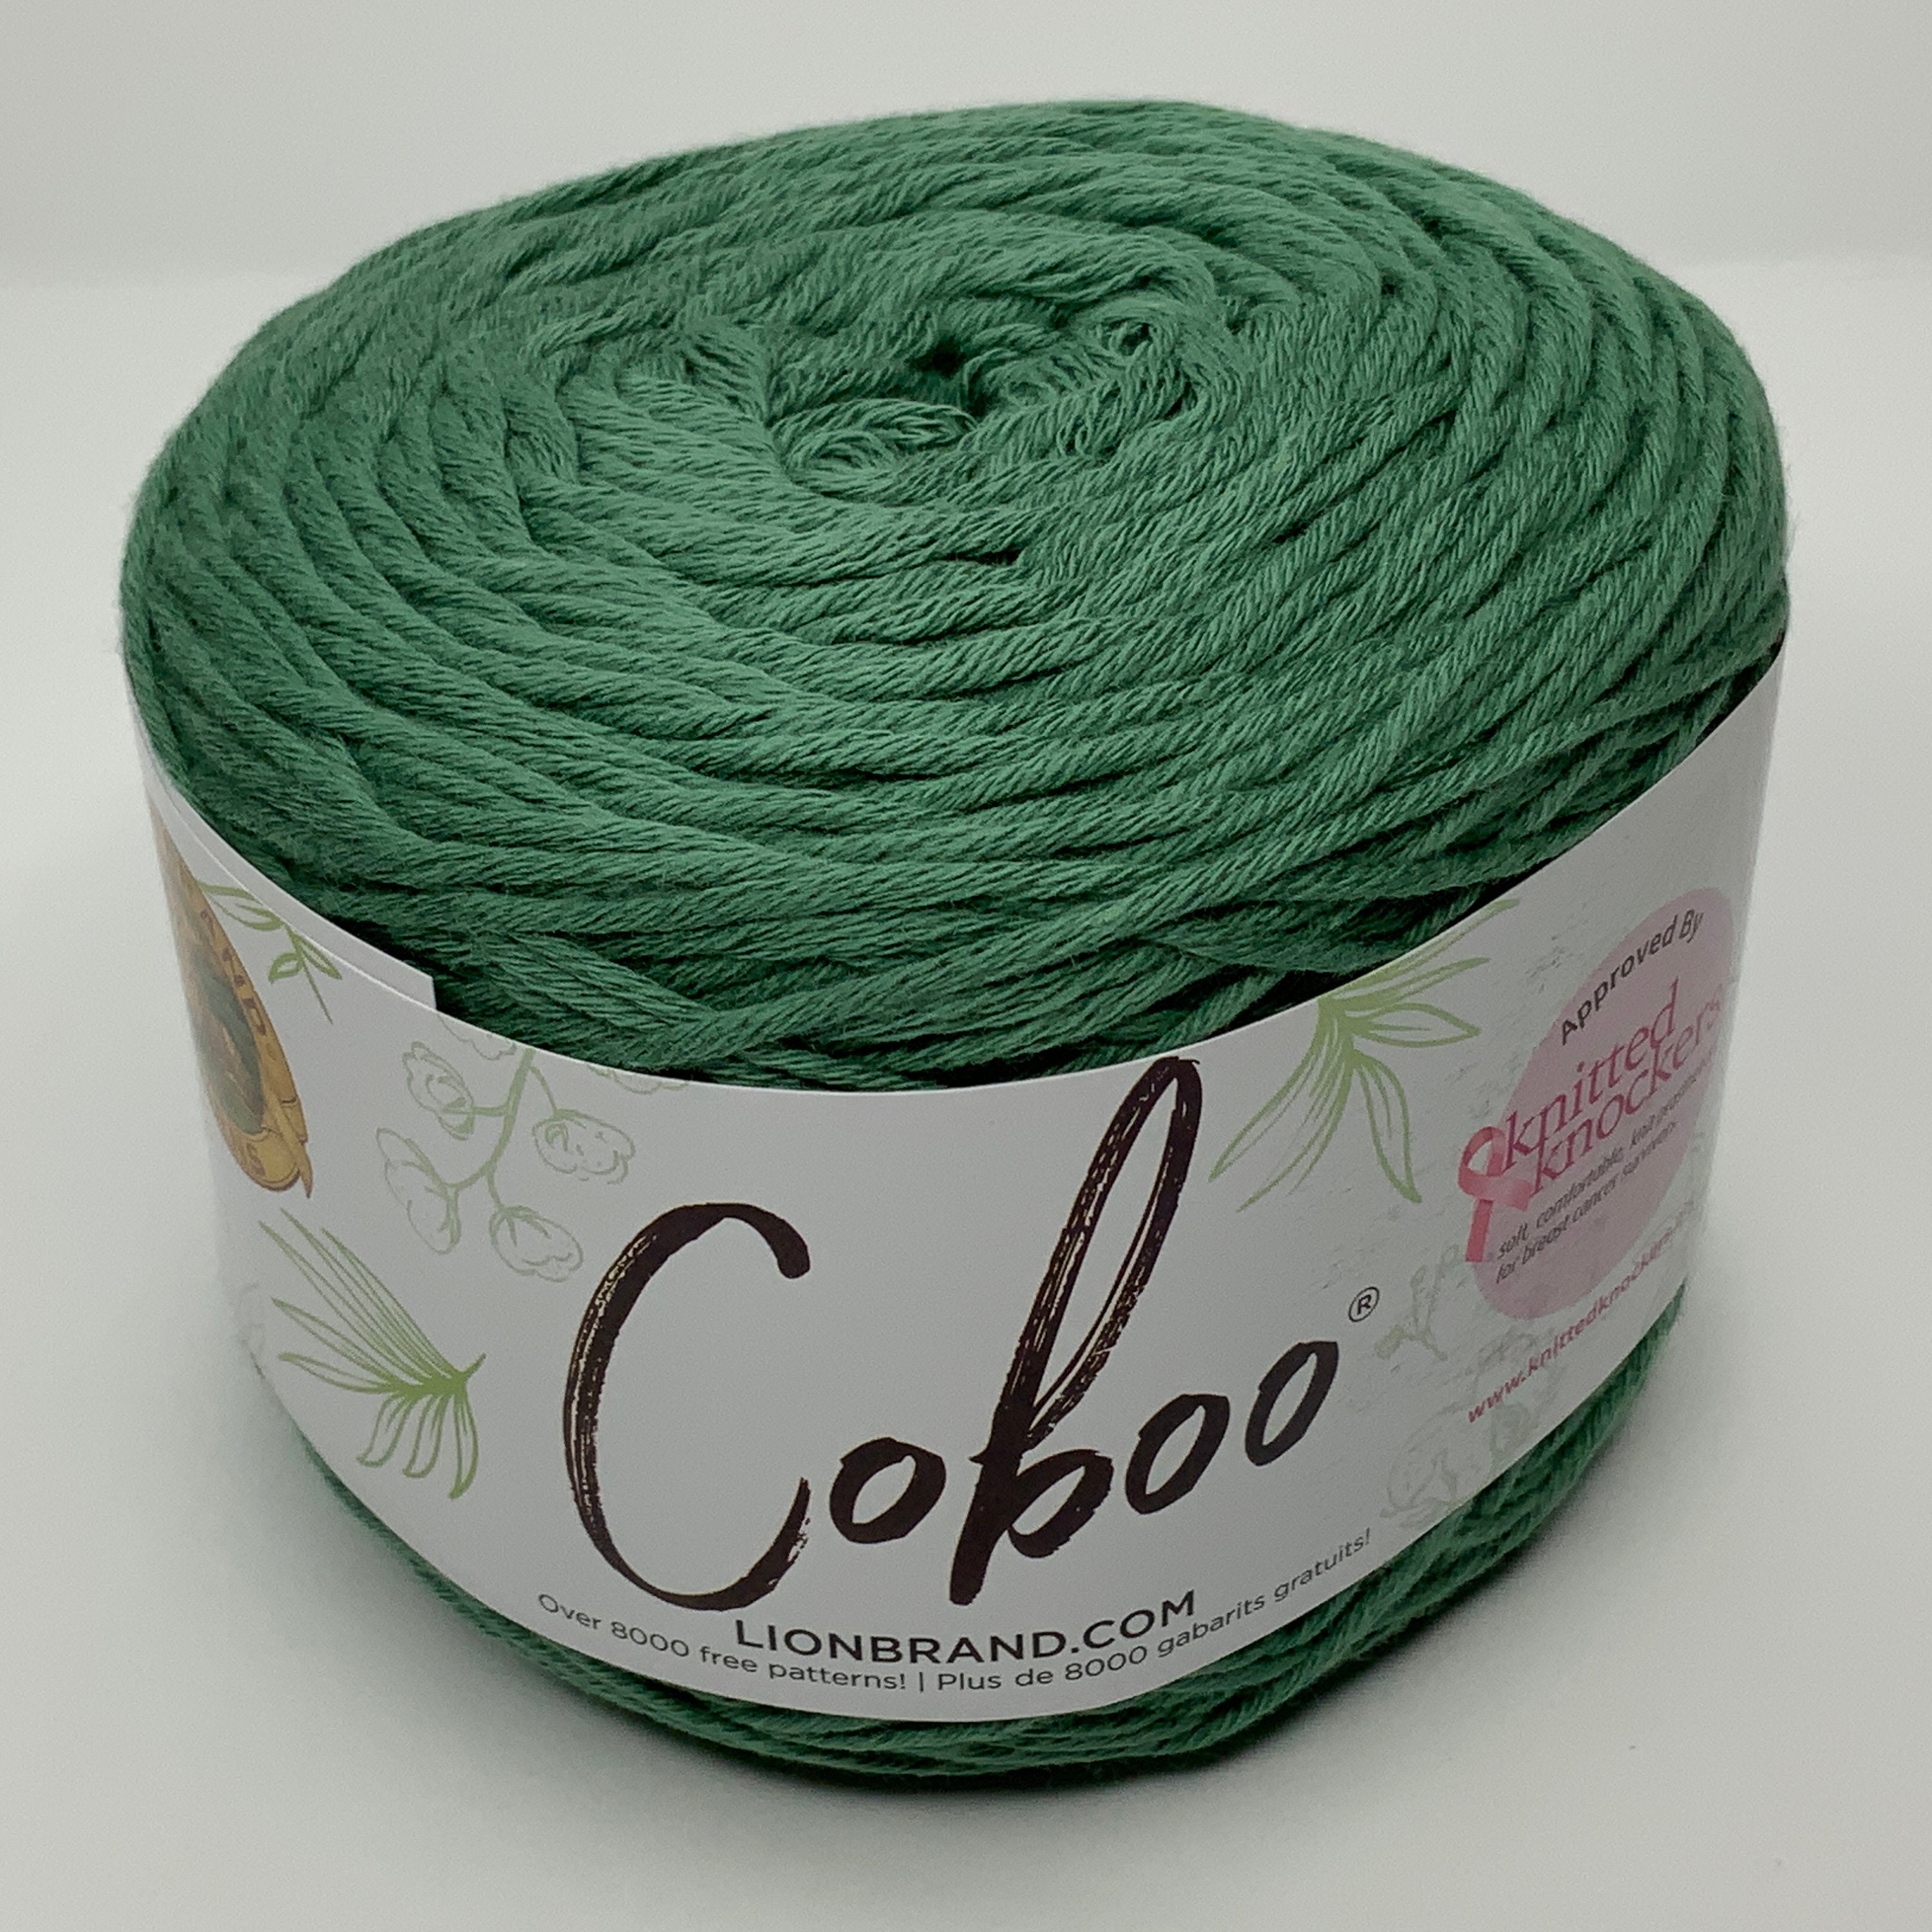 Lion Brand Yarn Coboo Lichen Light Green Yarn 3 Pack